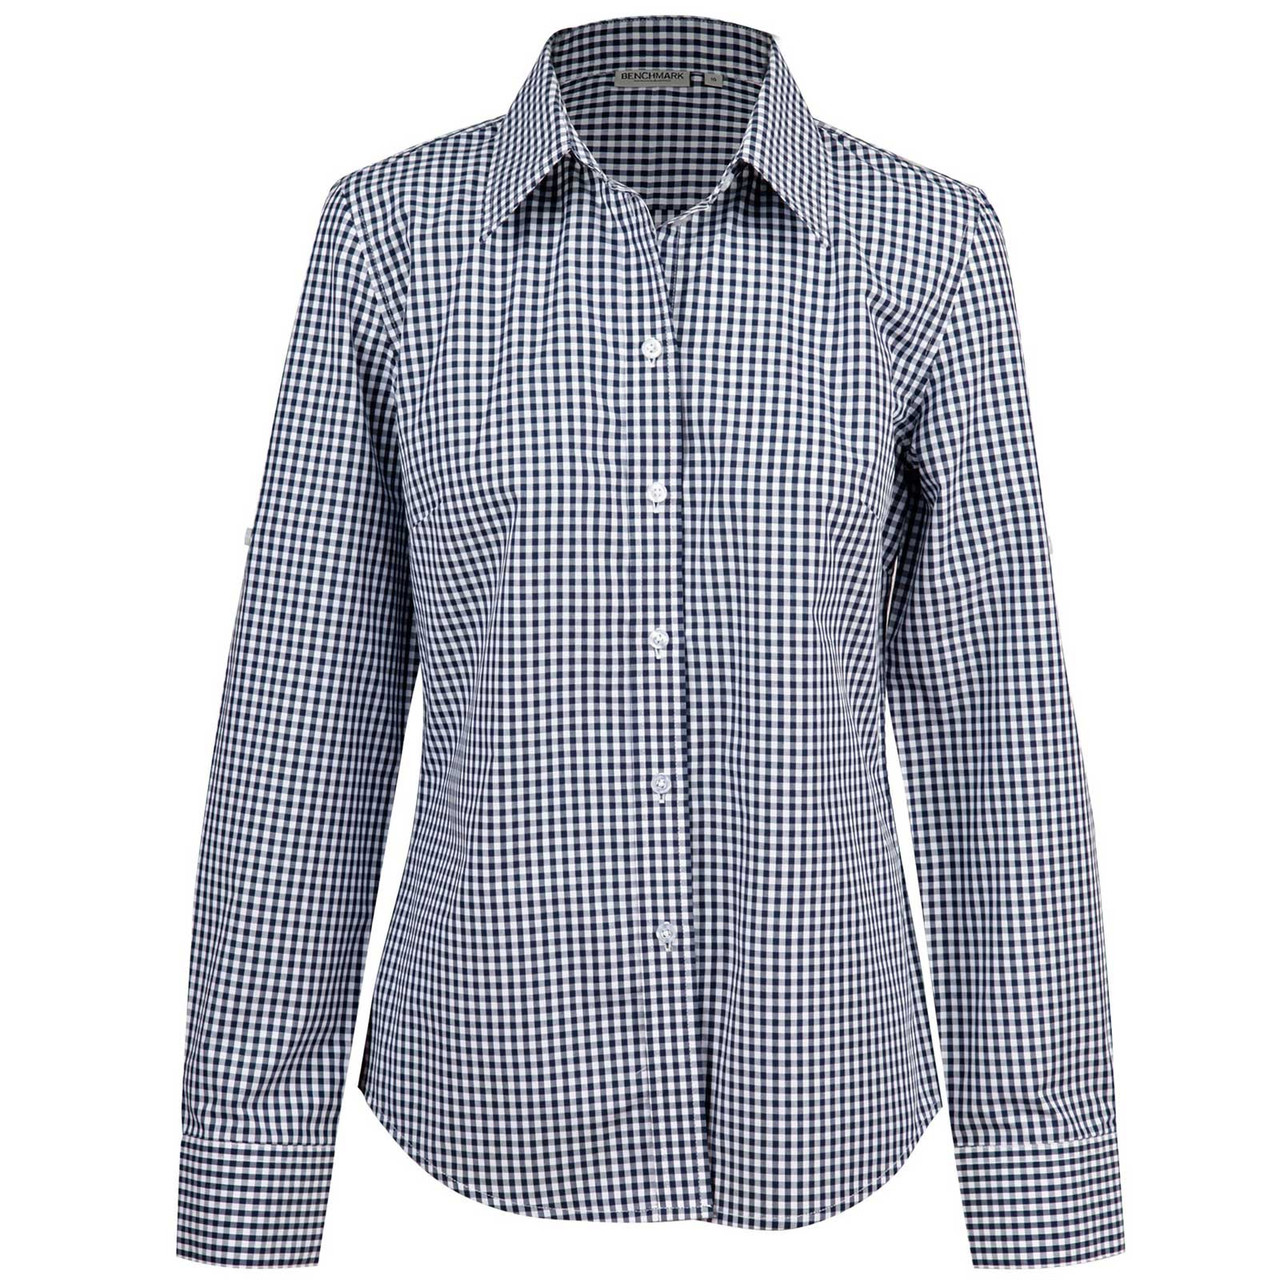 Ladies Gingham Checkered Short Sleeve Shirt | Shop Business Shirts Online